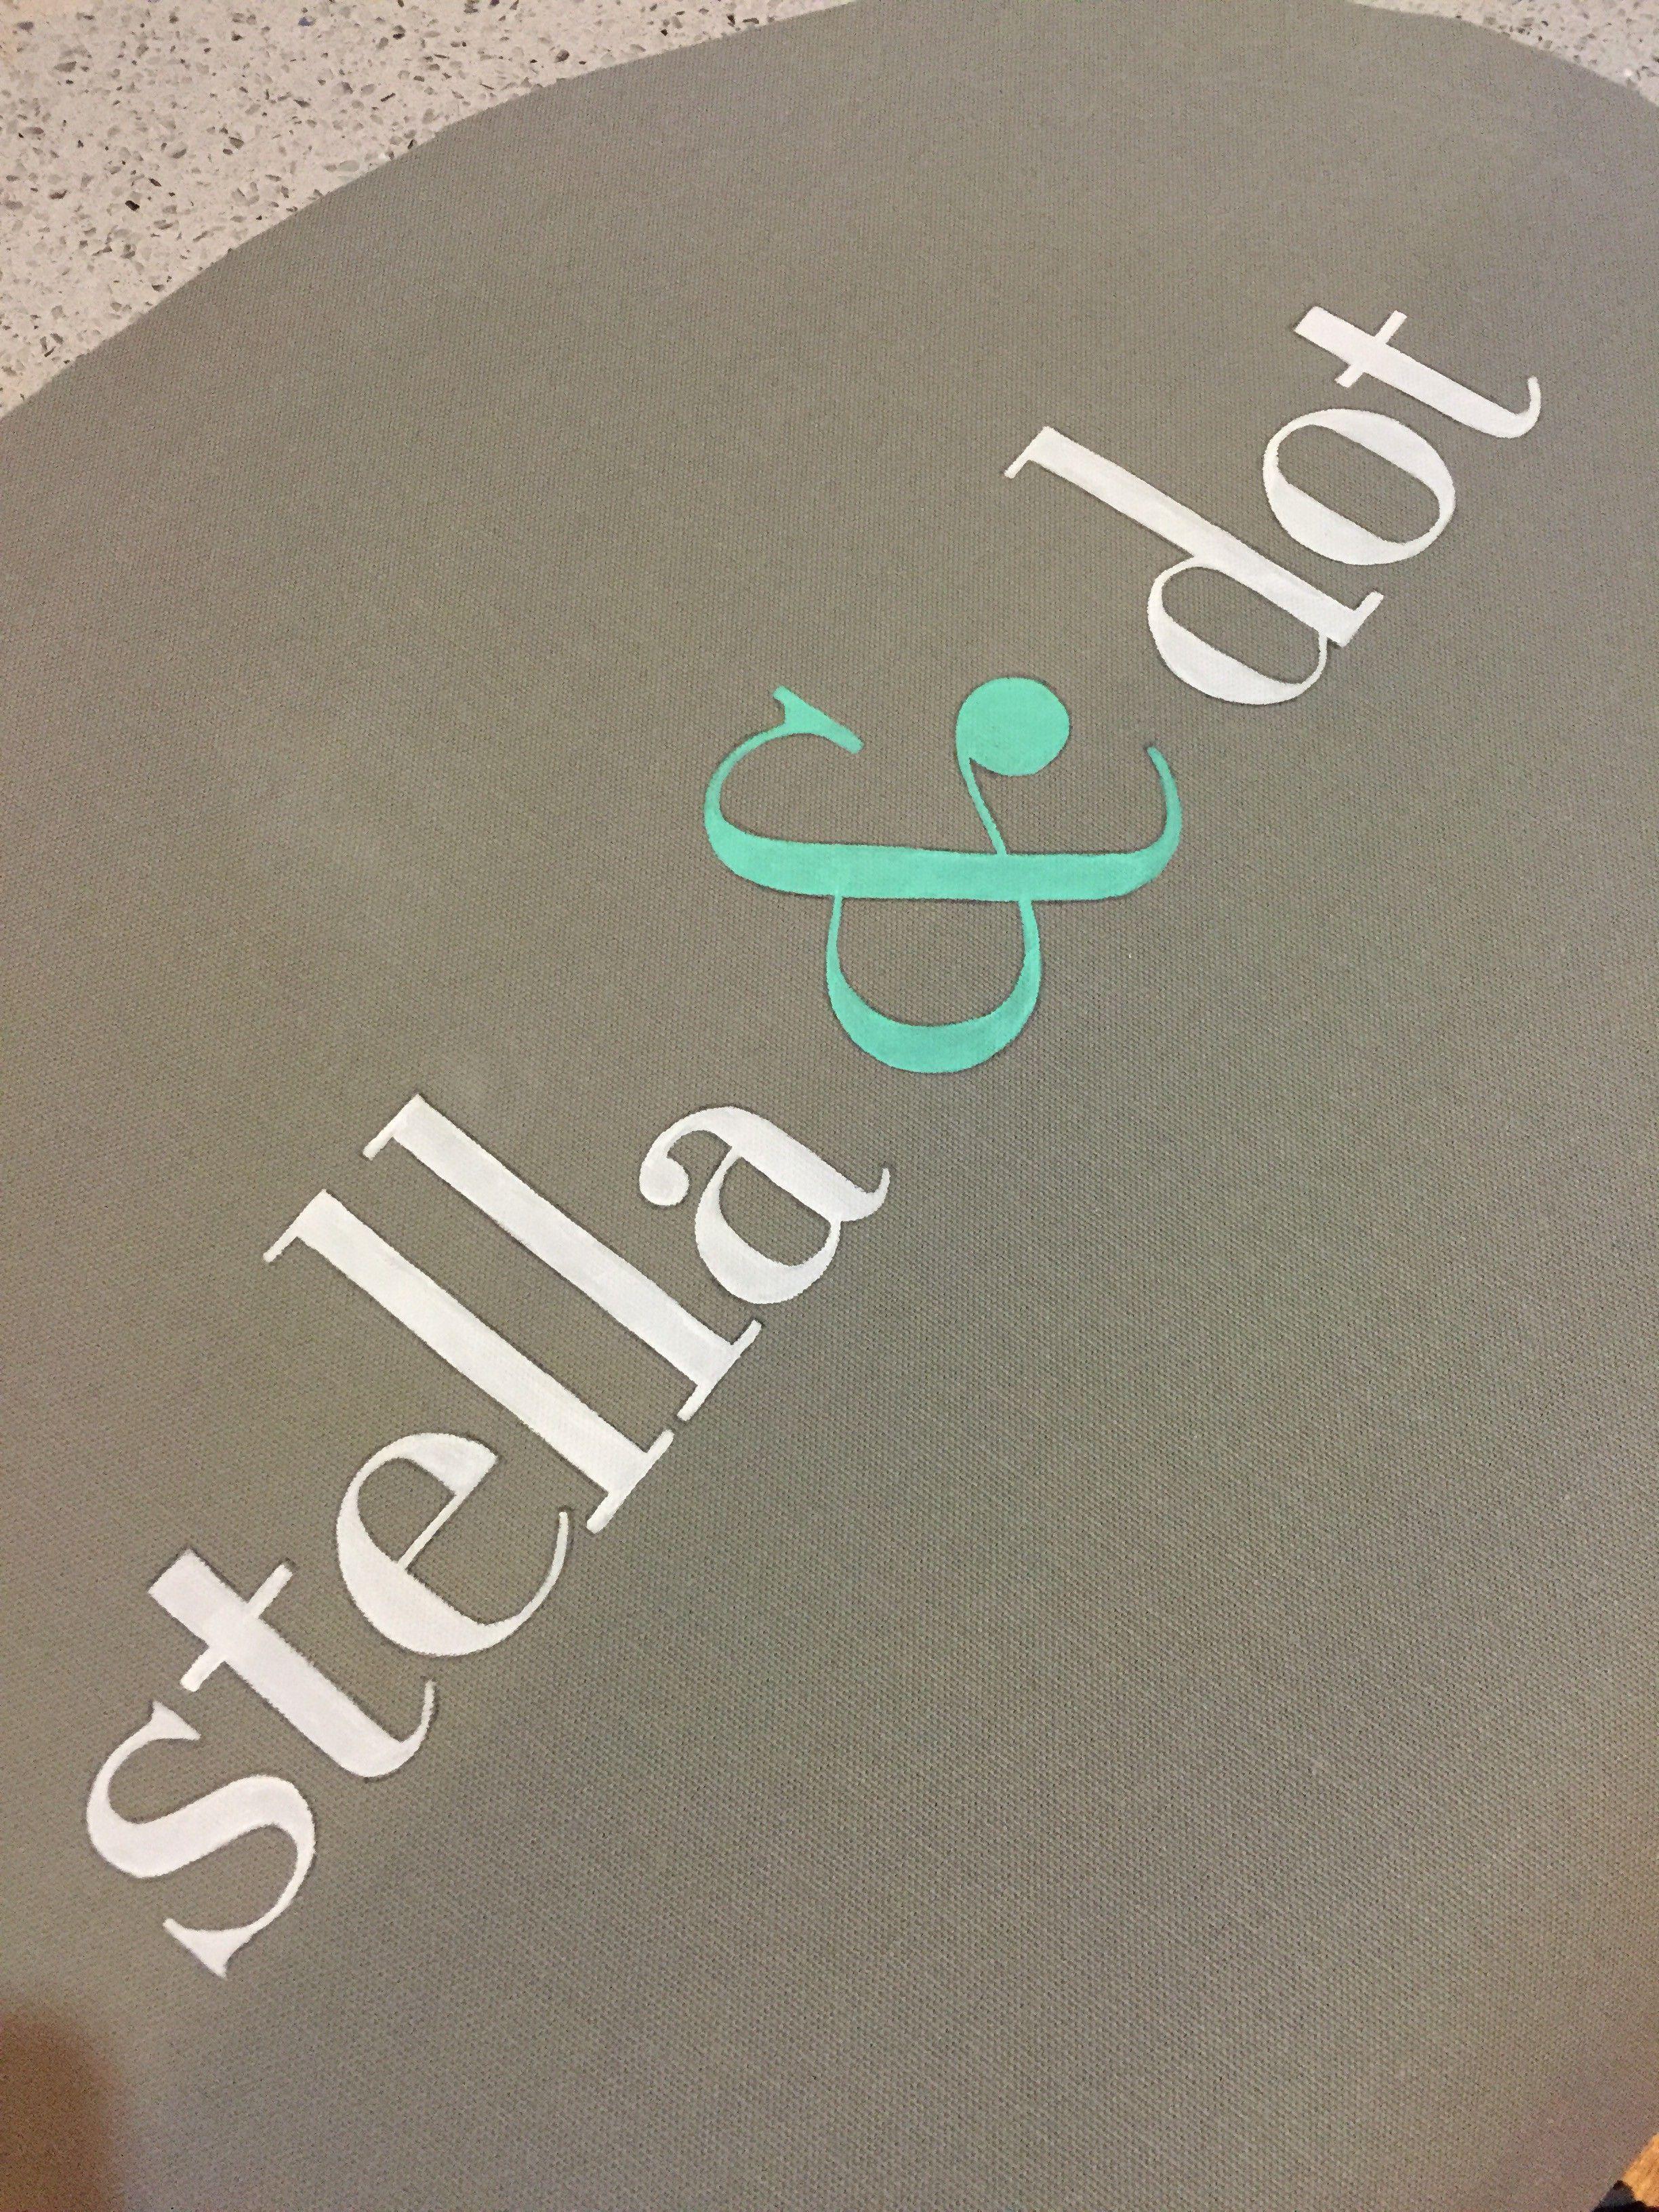 Stella and Dot Logo - DIY Stella & Dot Display Sign Tutorial | Hello Nutritarian